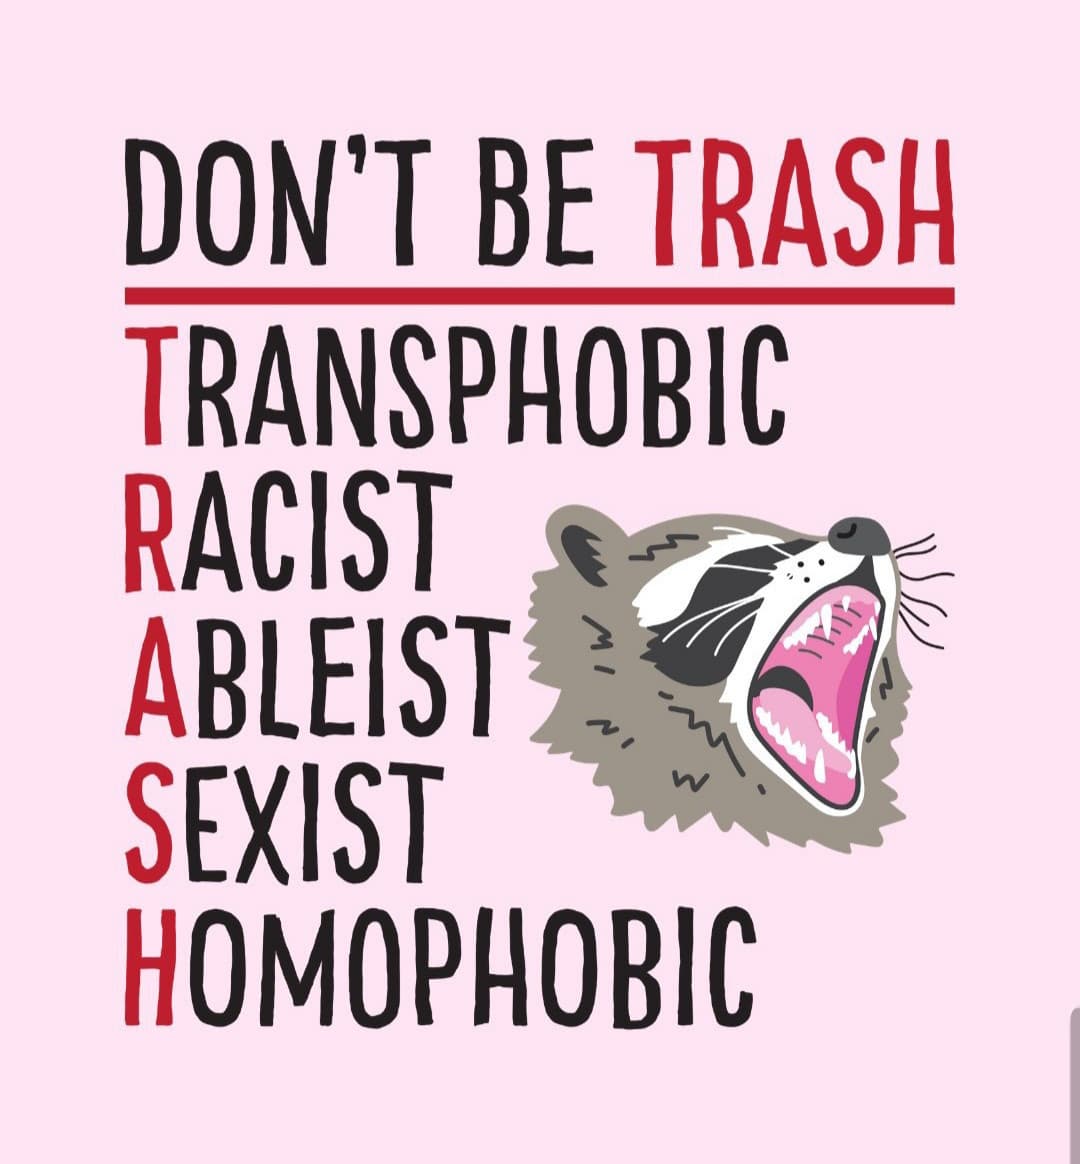 Don't be trash